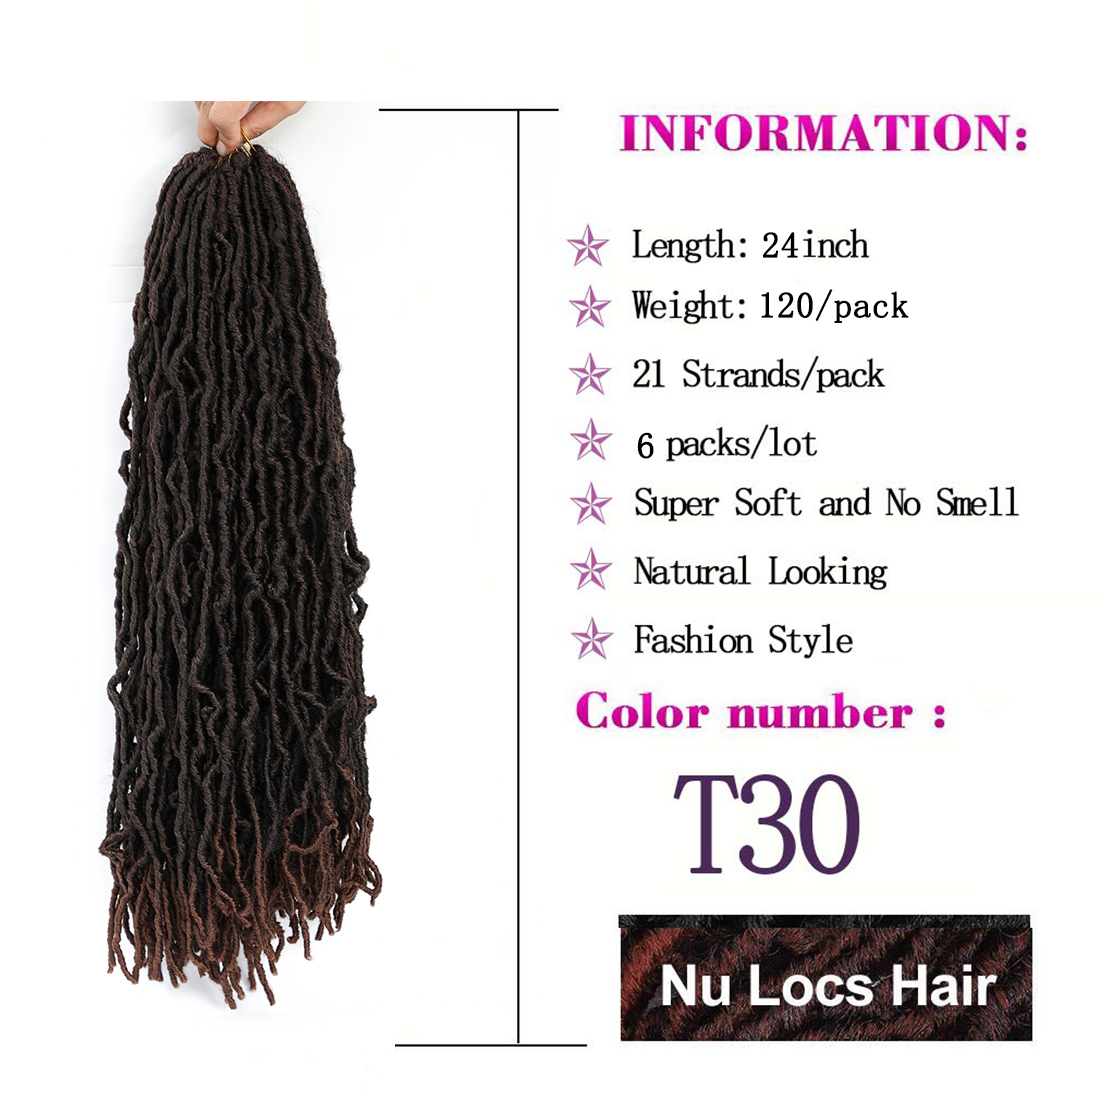 I&K Nu Faux Locs Hair 6 packs 24 Inch - #T30